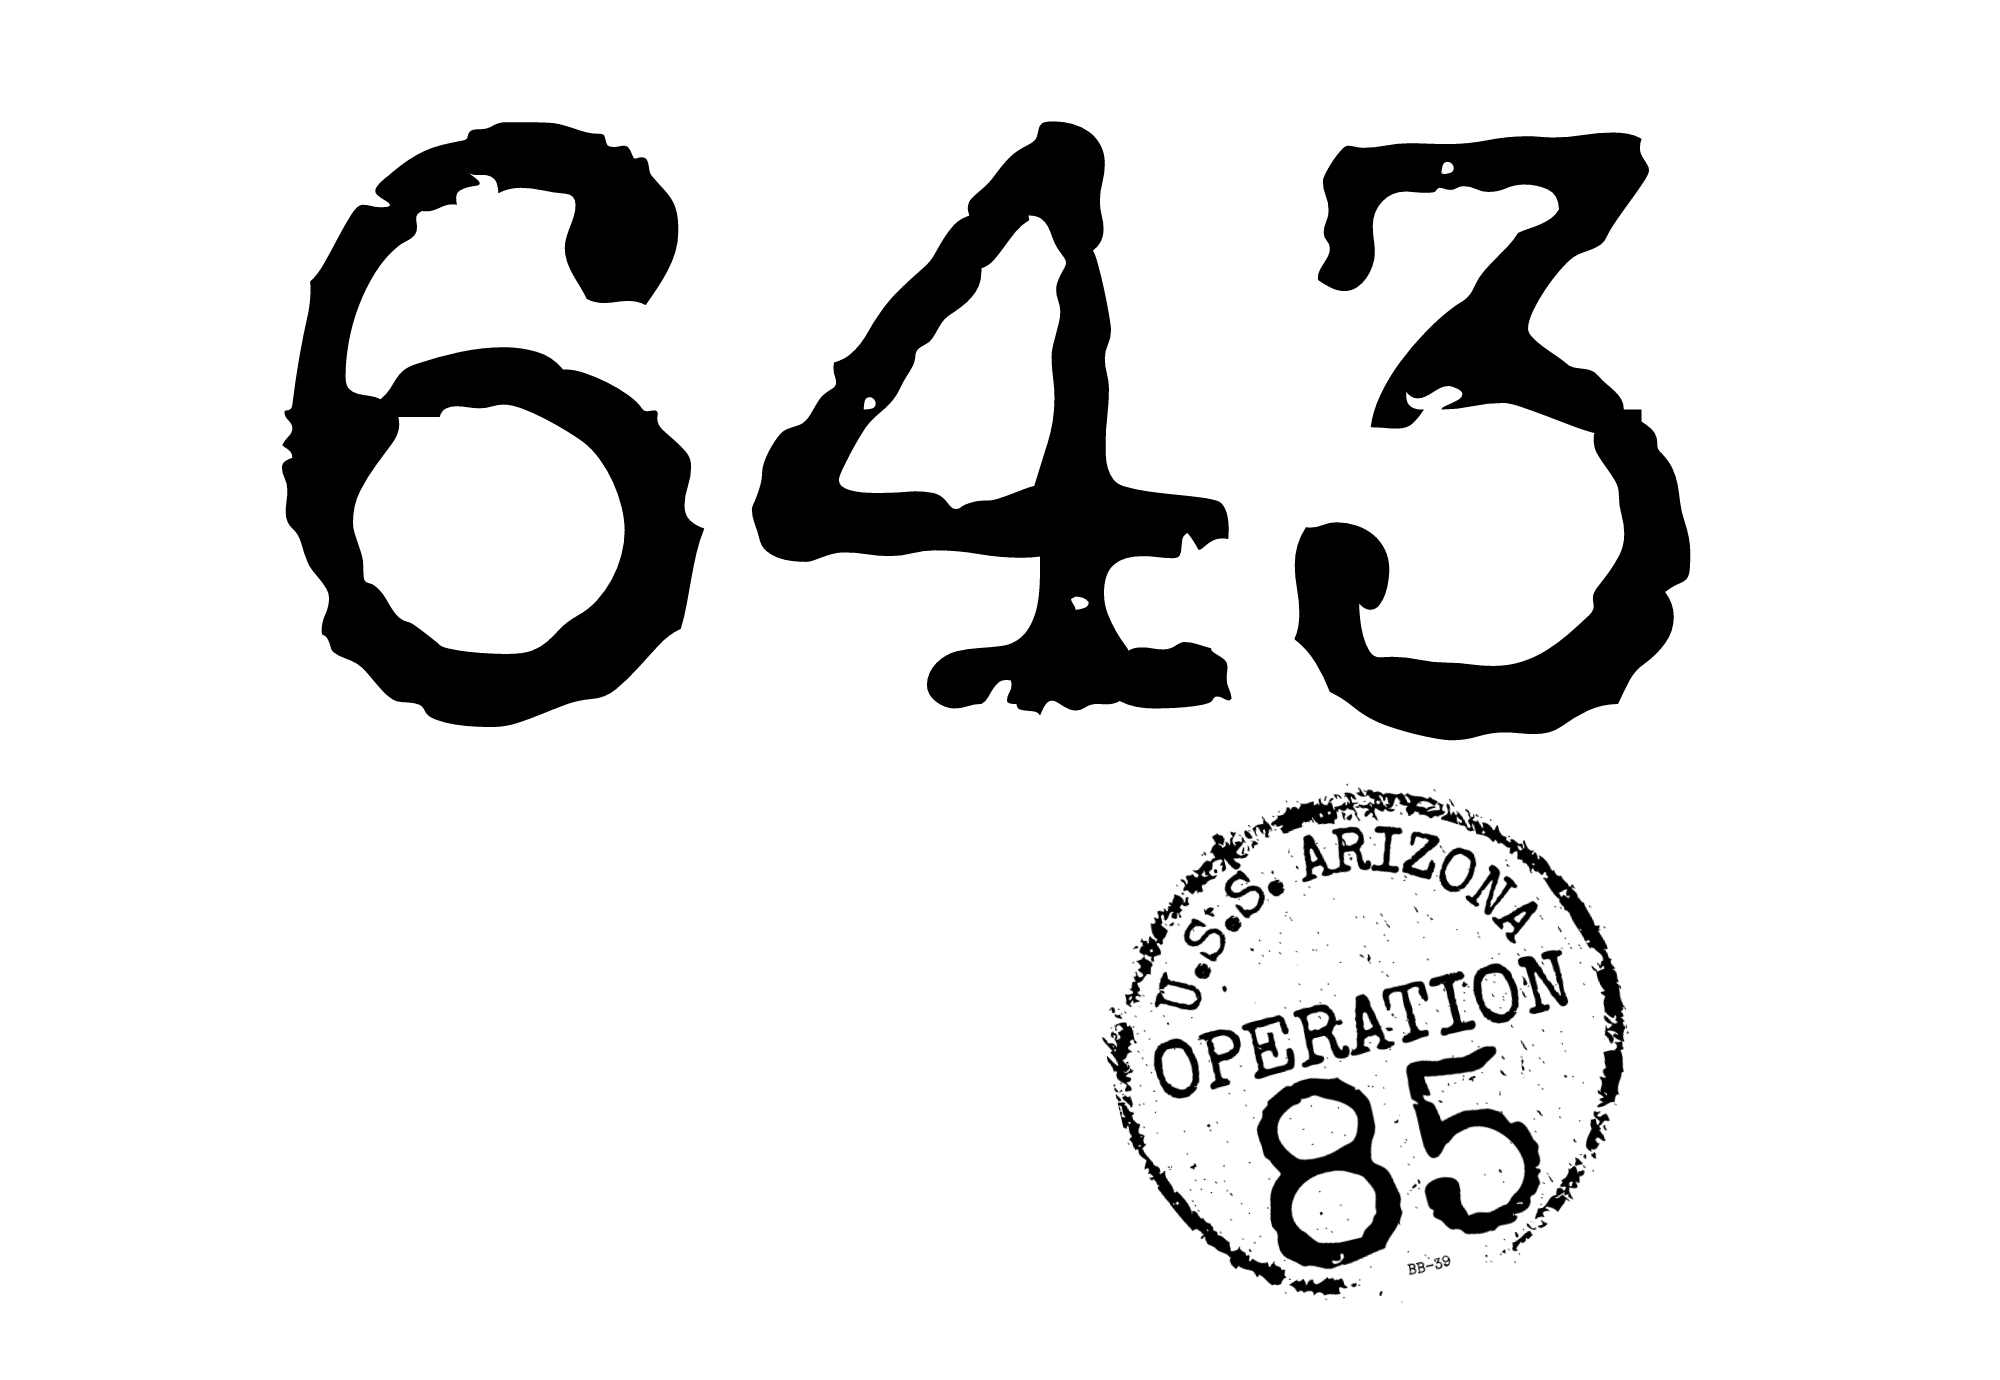 643 Operation 85